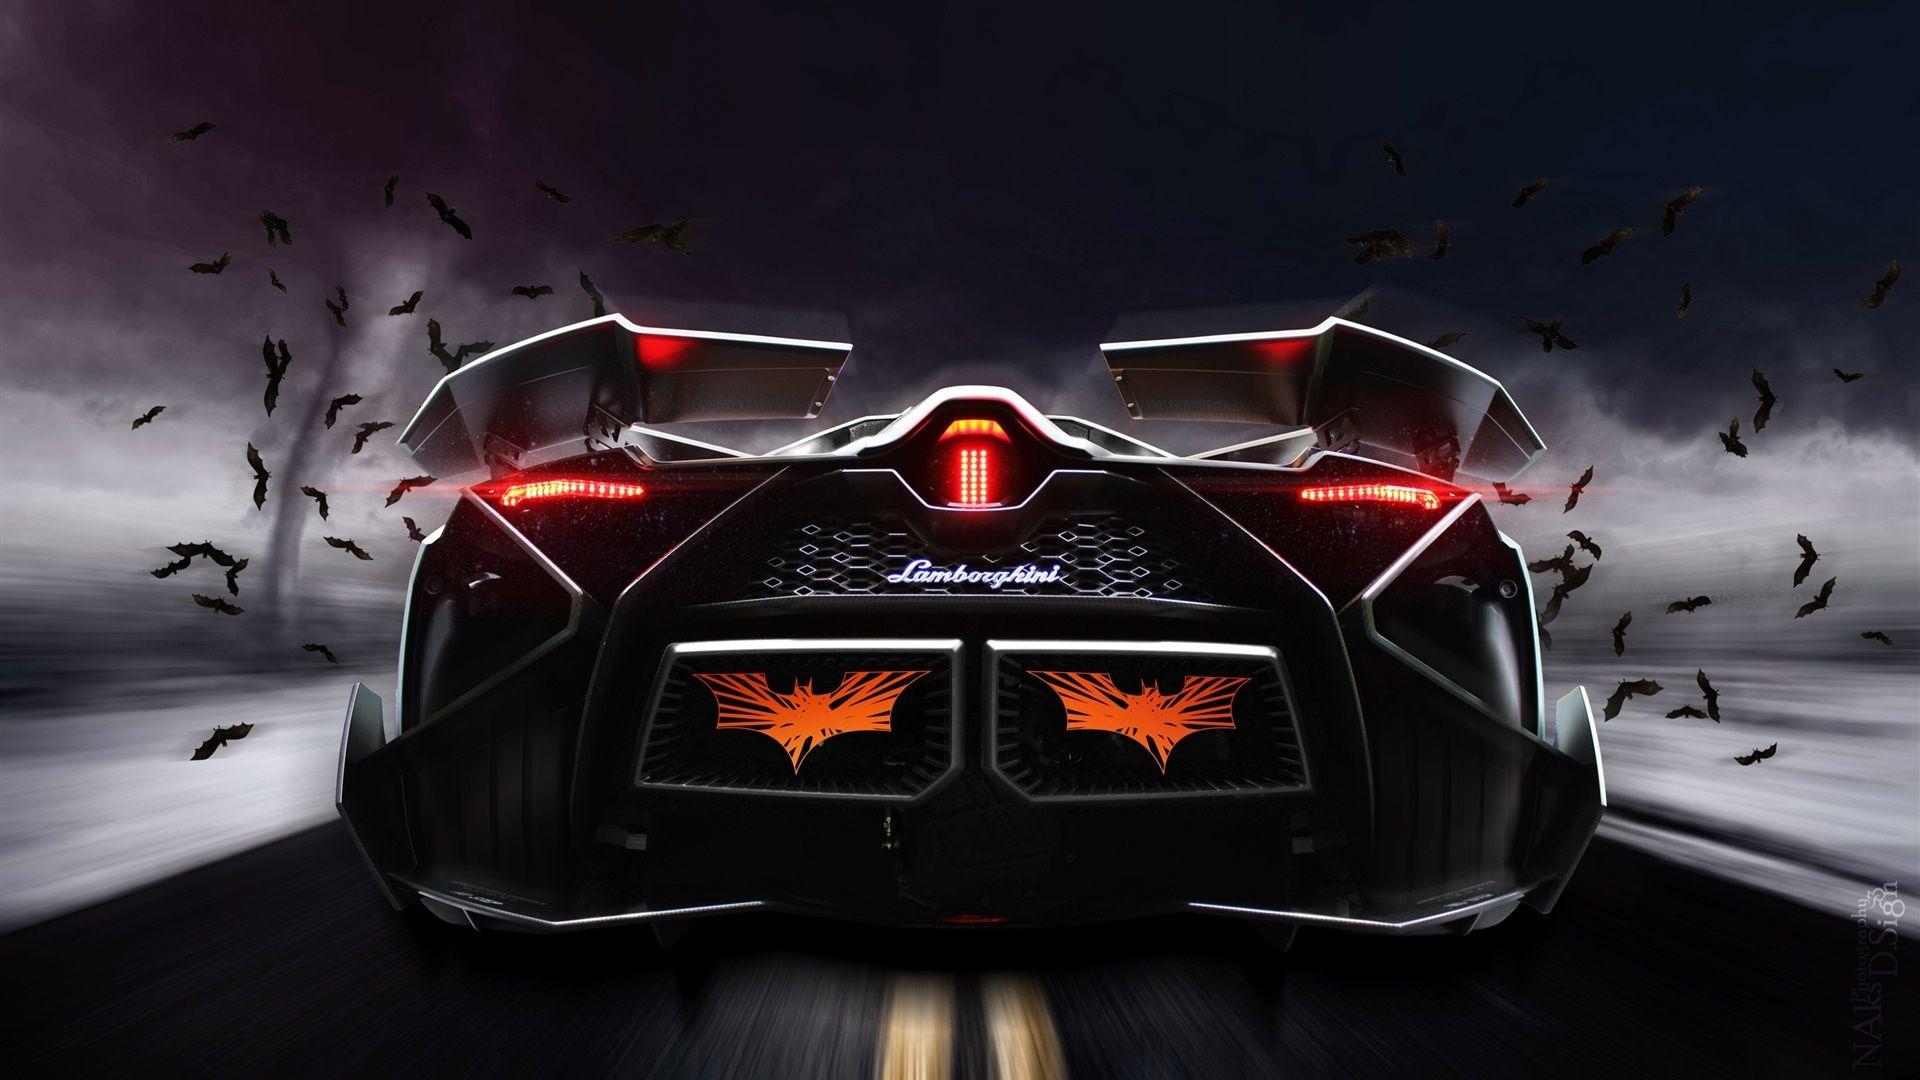 Lamborghini Egoista concept supercar rear view 4k Ultra HD Wallpaper